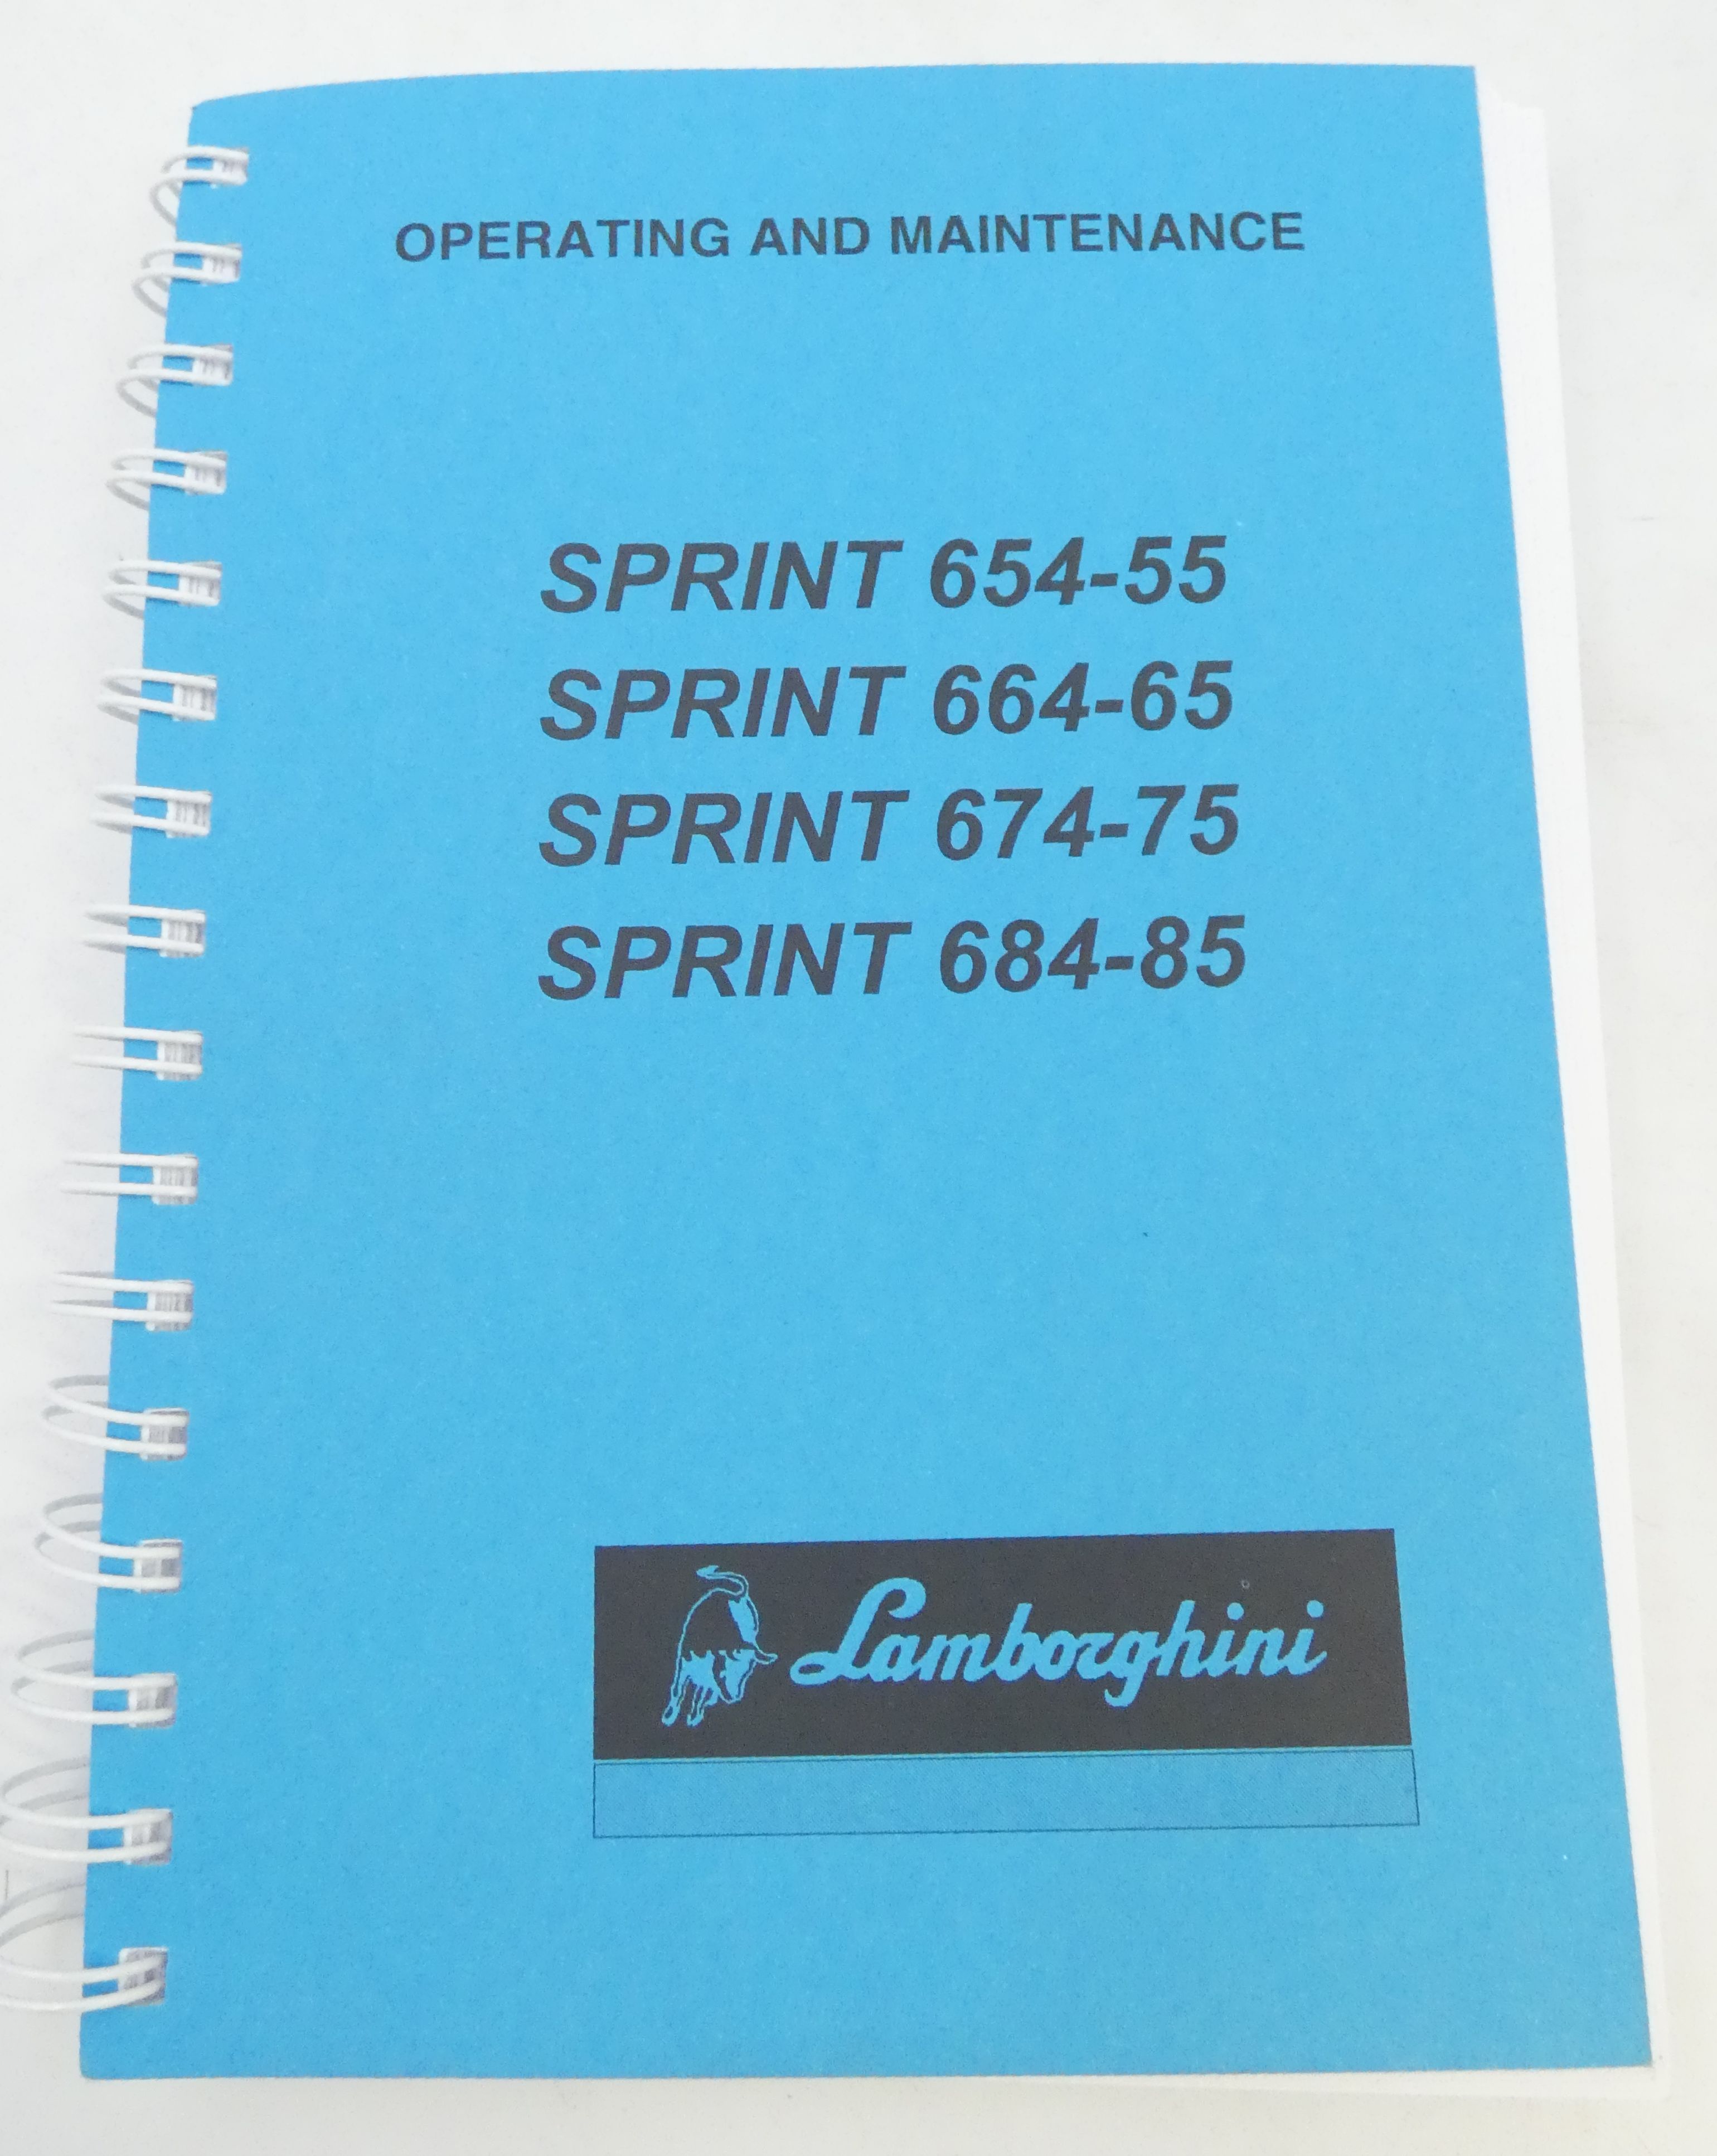 Lamborghini Sprint 654-55, 664-65, 674-75, 684-85 operating and maintenance